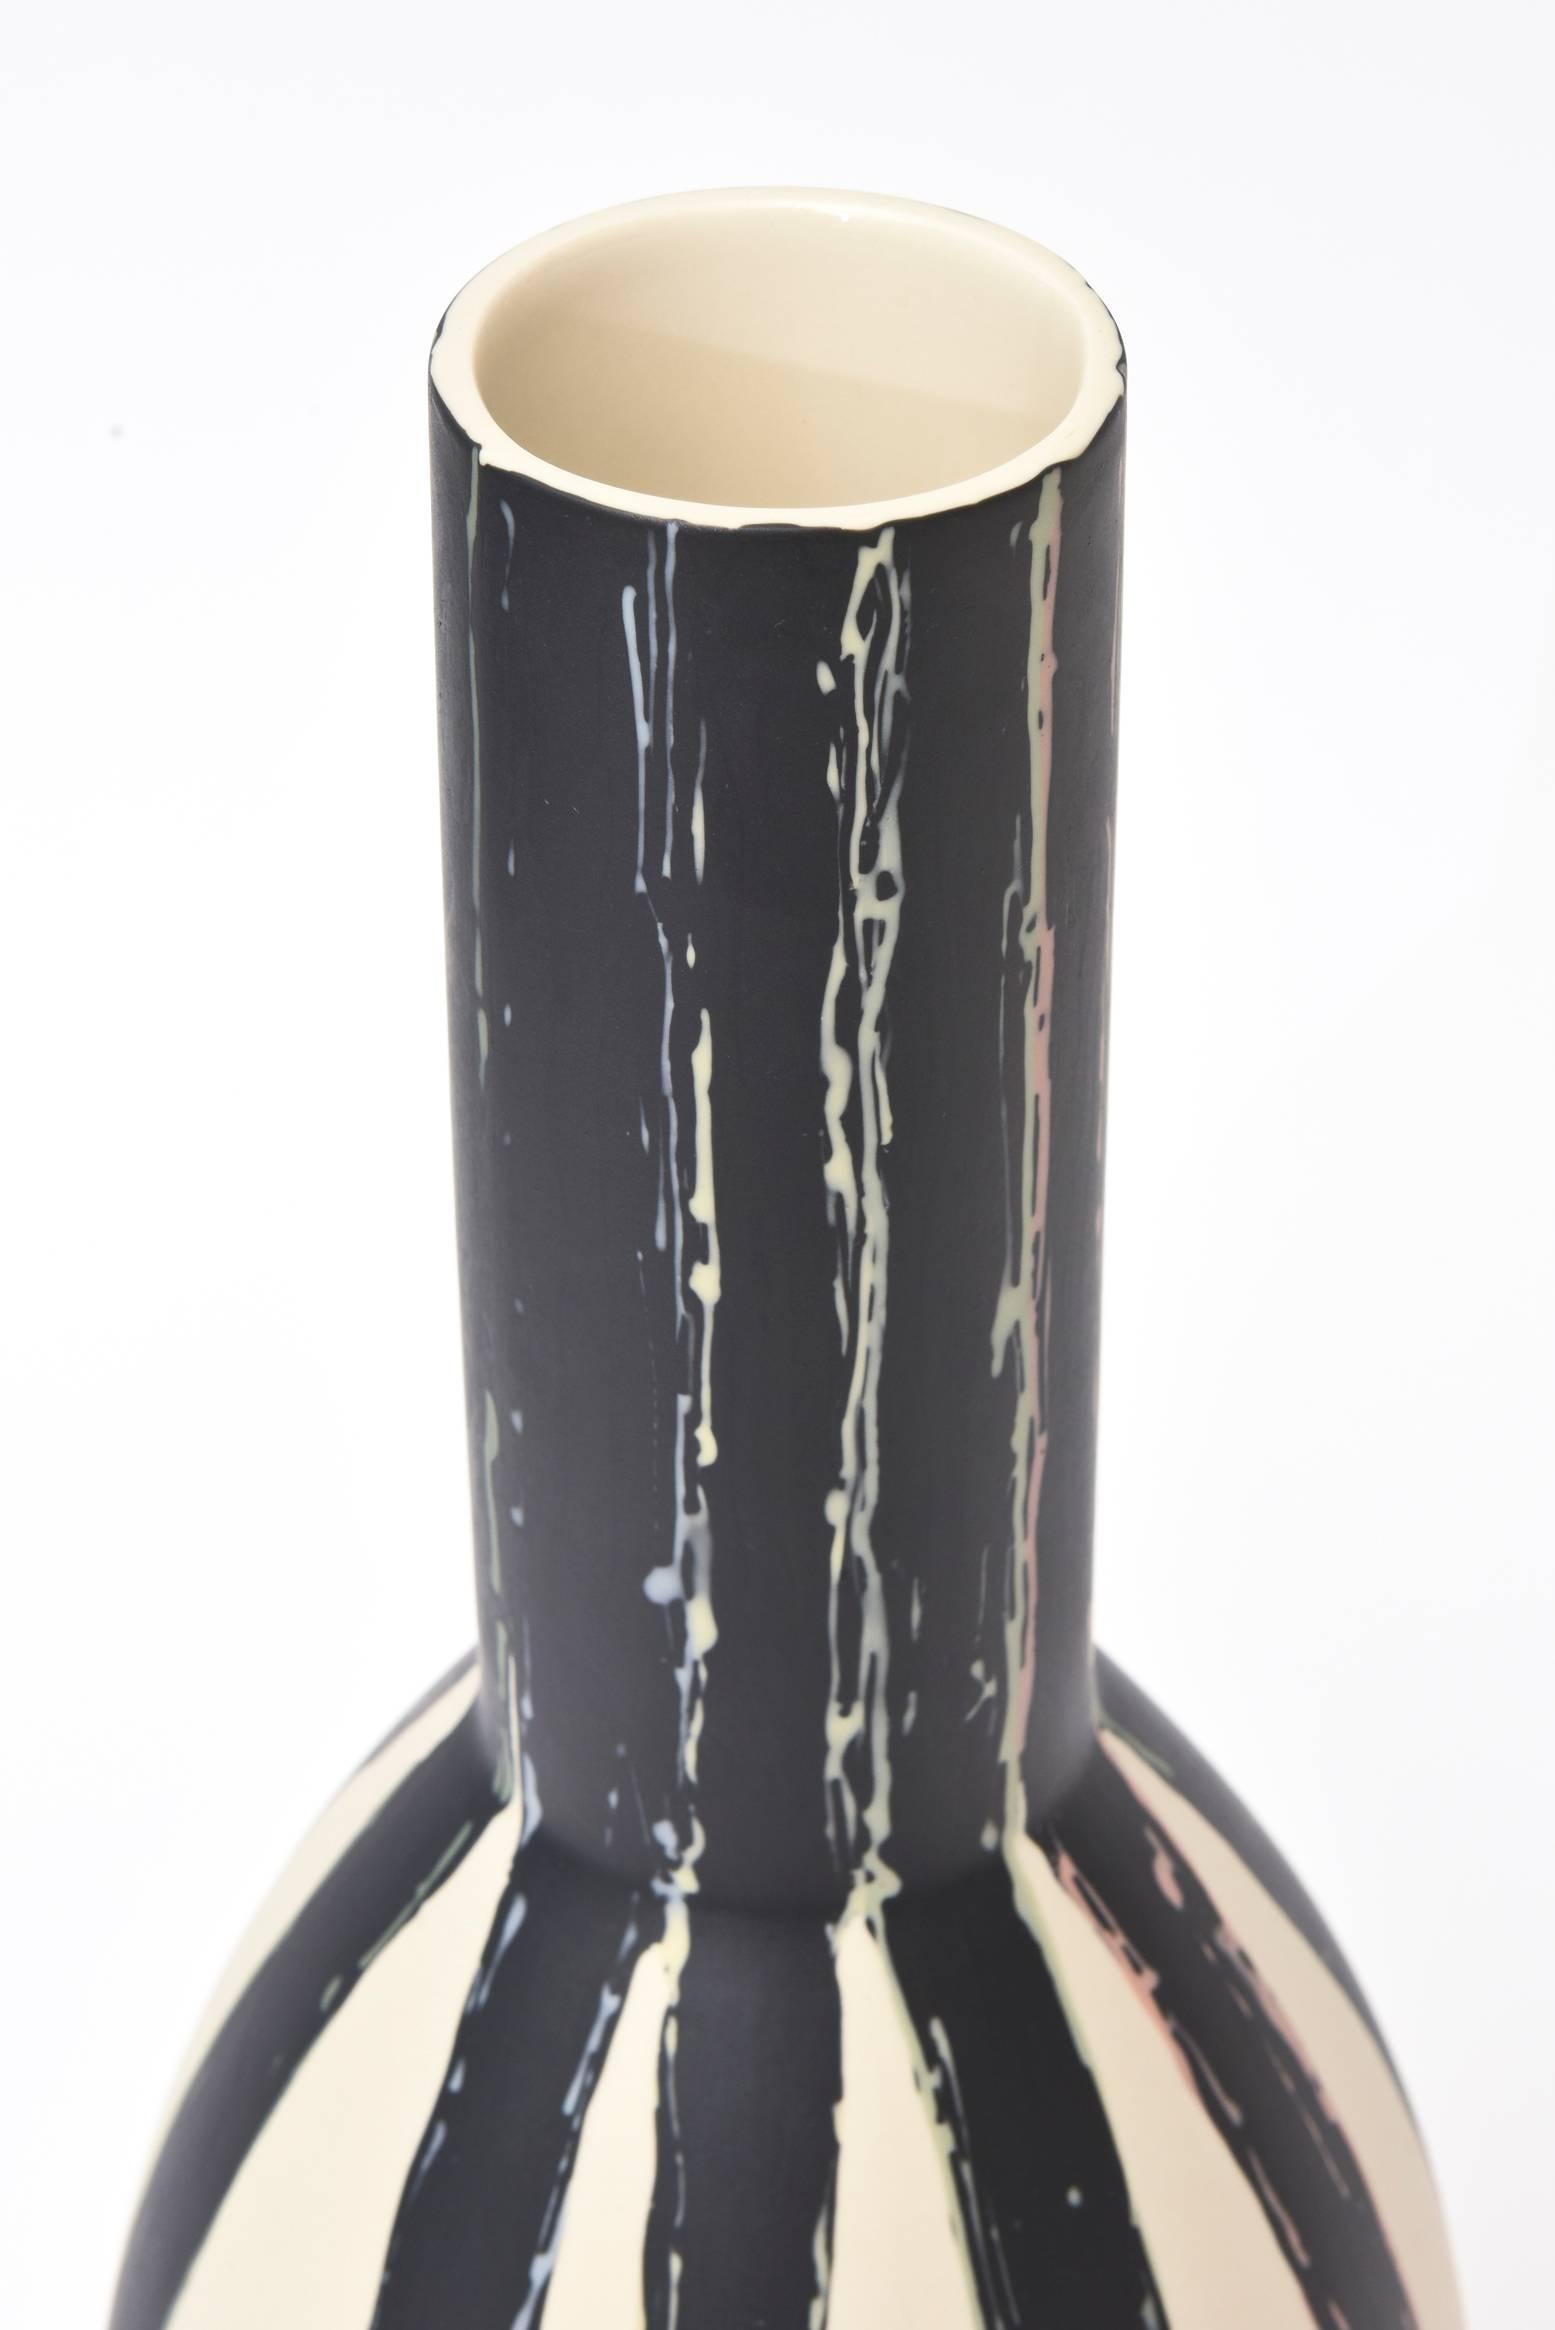 American Ceramic Vase or Vessel Hand-Painted